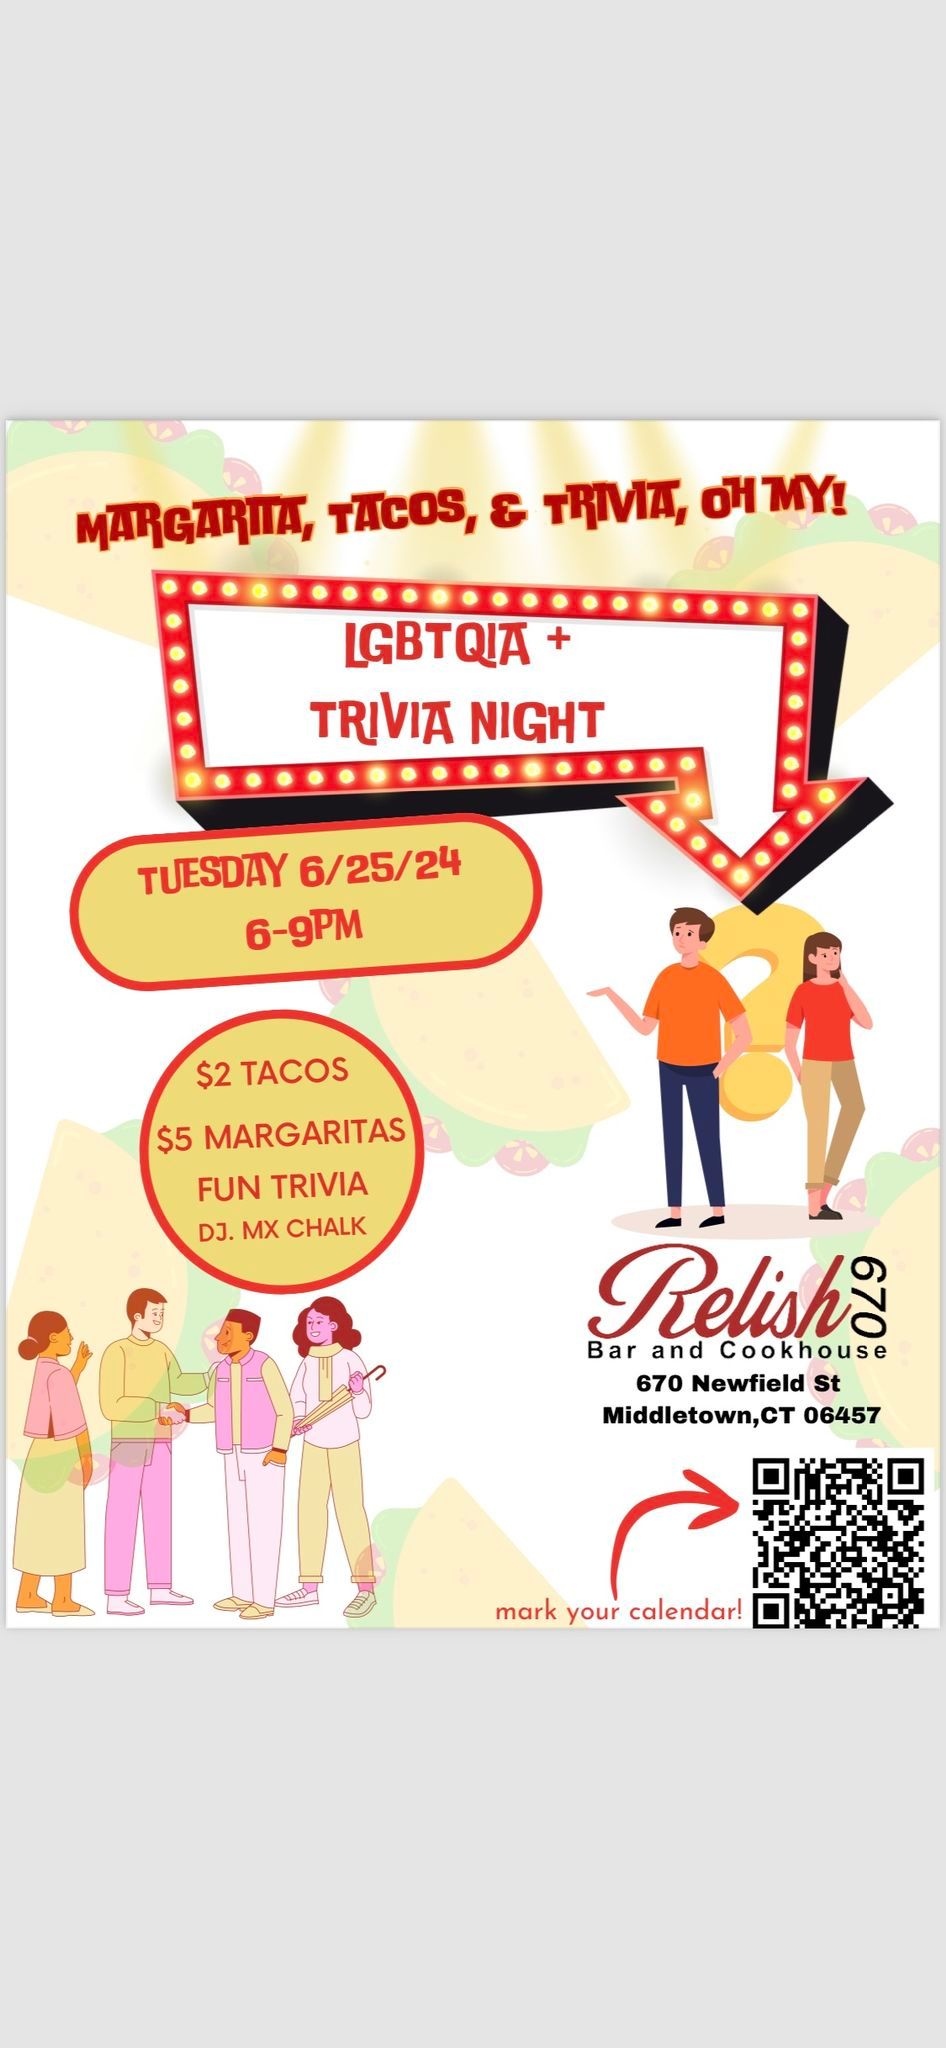 Margaritas, Tacos, and Trivia Night